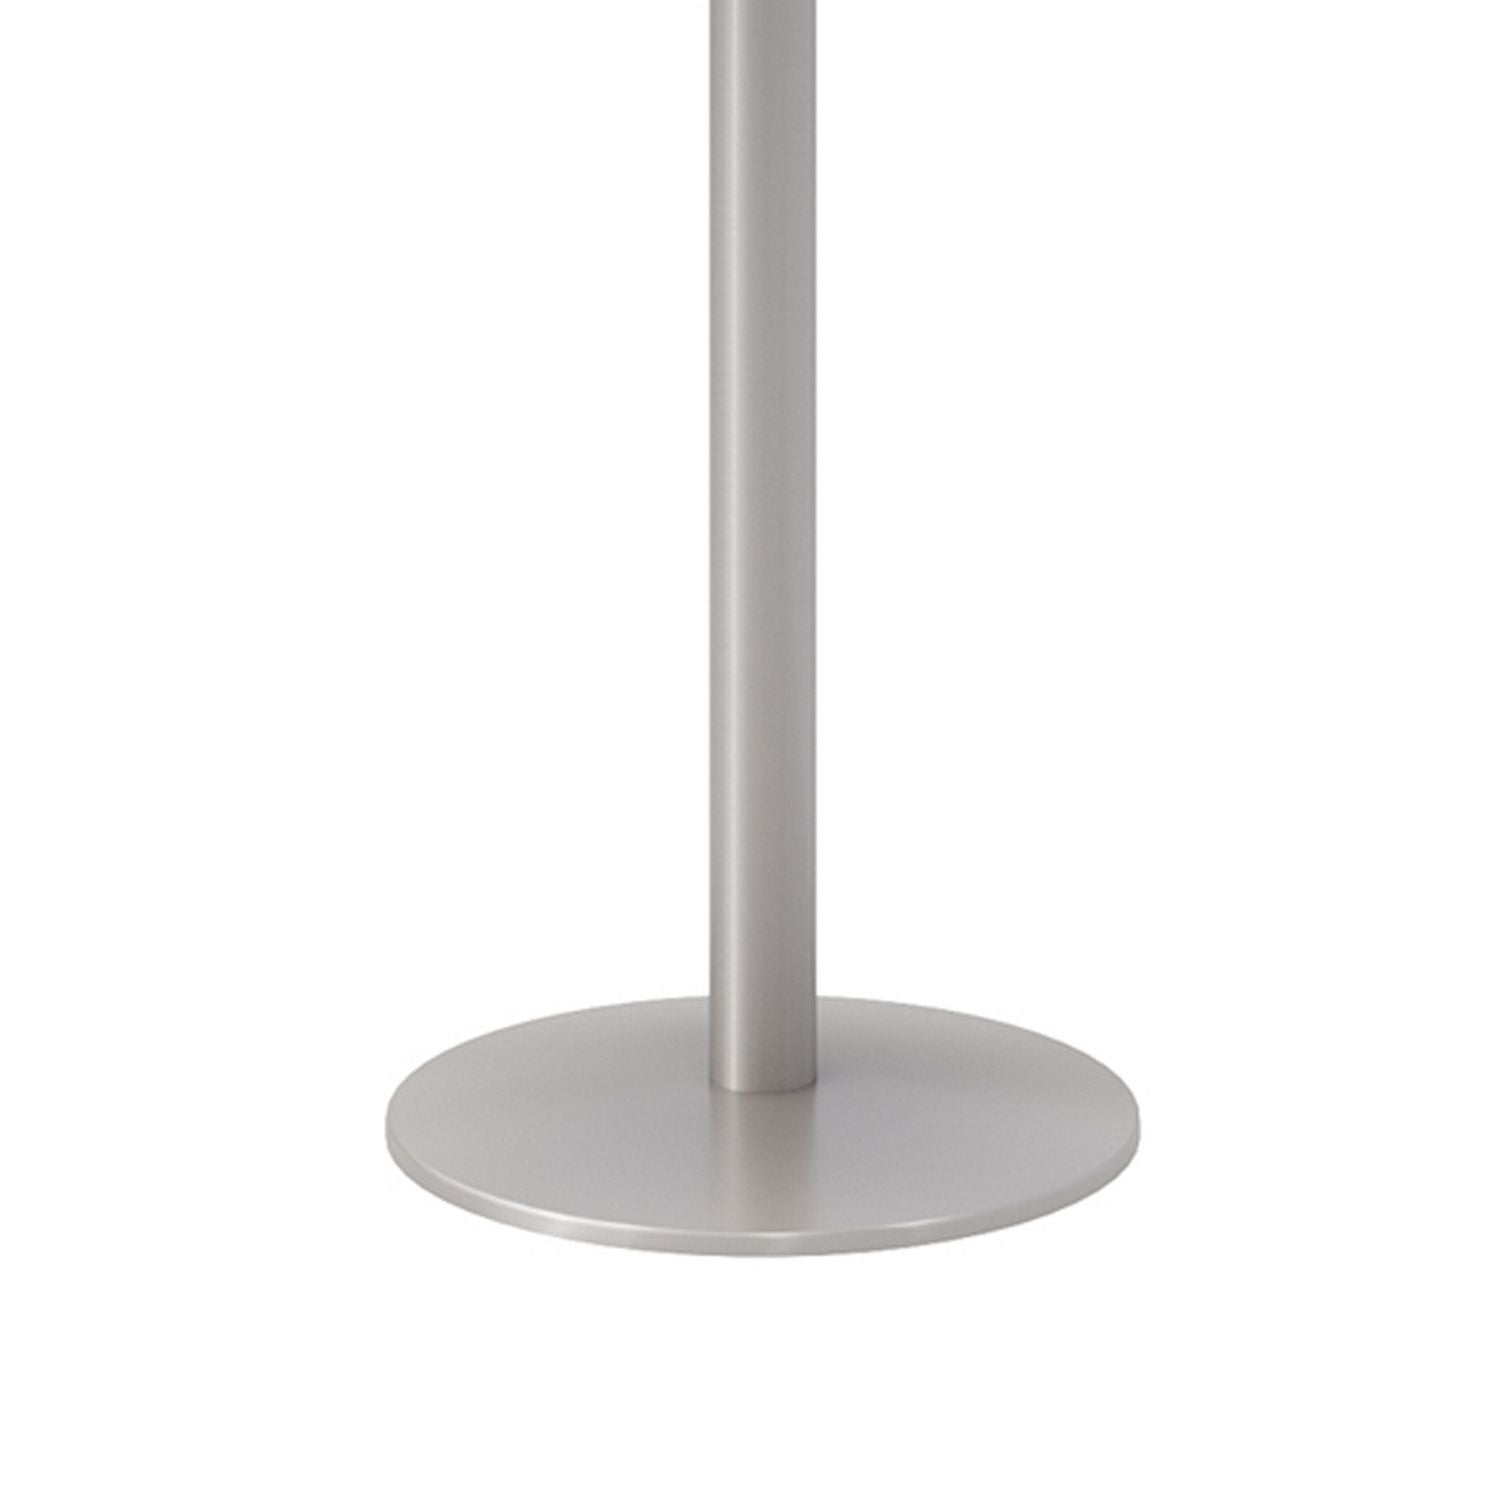 Pedestal Bistro Table with Four White Kool Series Barstools, Round, 36" Dia x 41h, Studio Teak, Ships in 4-6 Business Days - 3